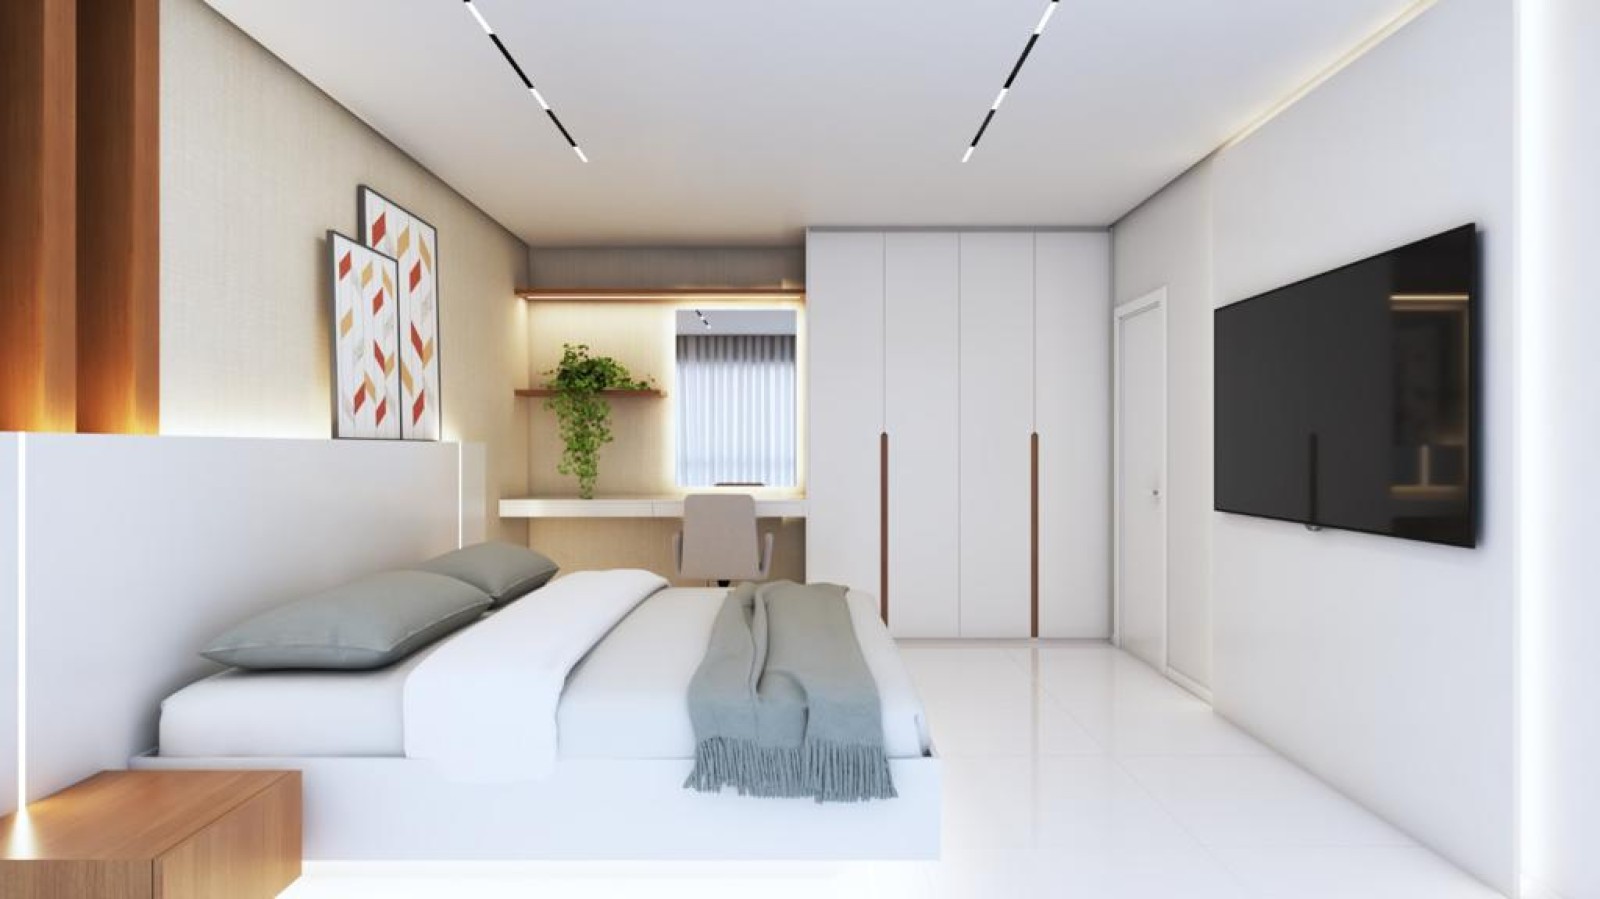 3 Bedroom Luxury House, for sale, in Portimão, Algarve_224538